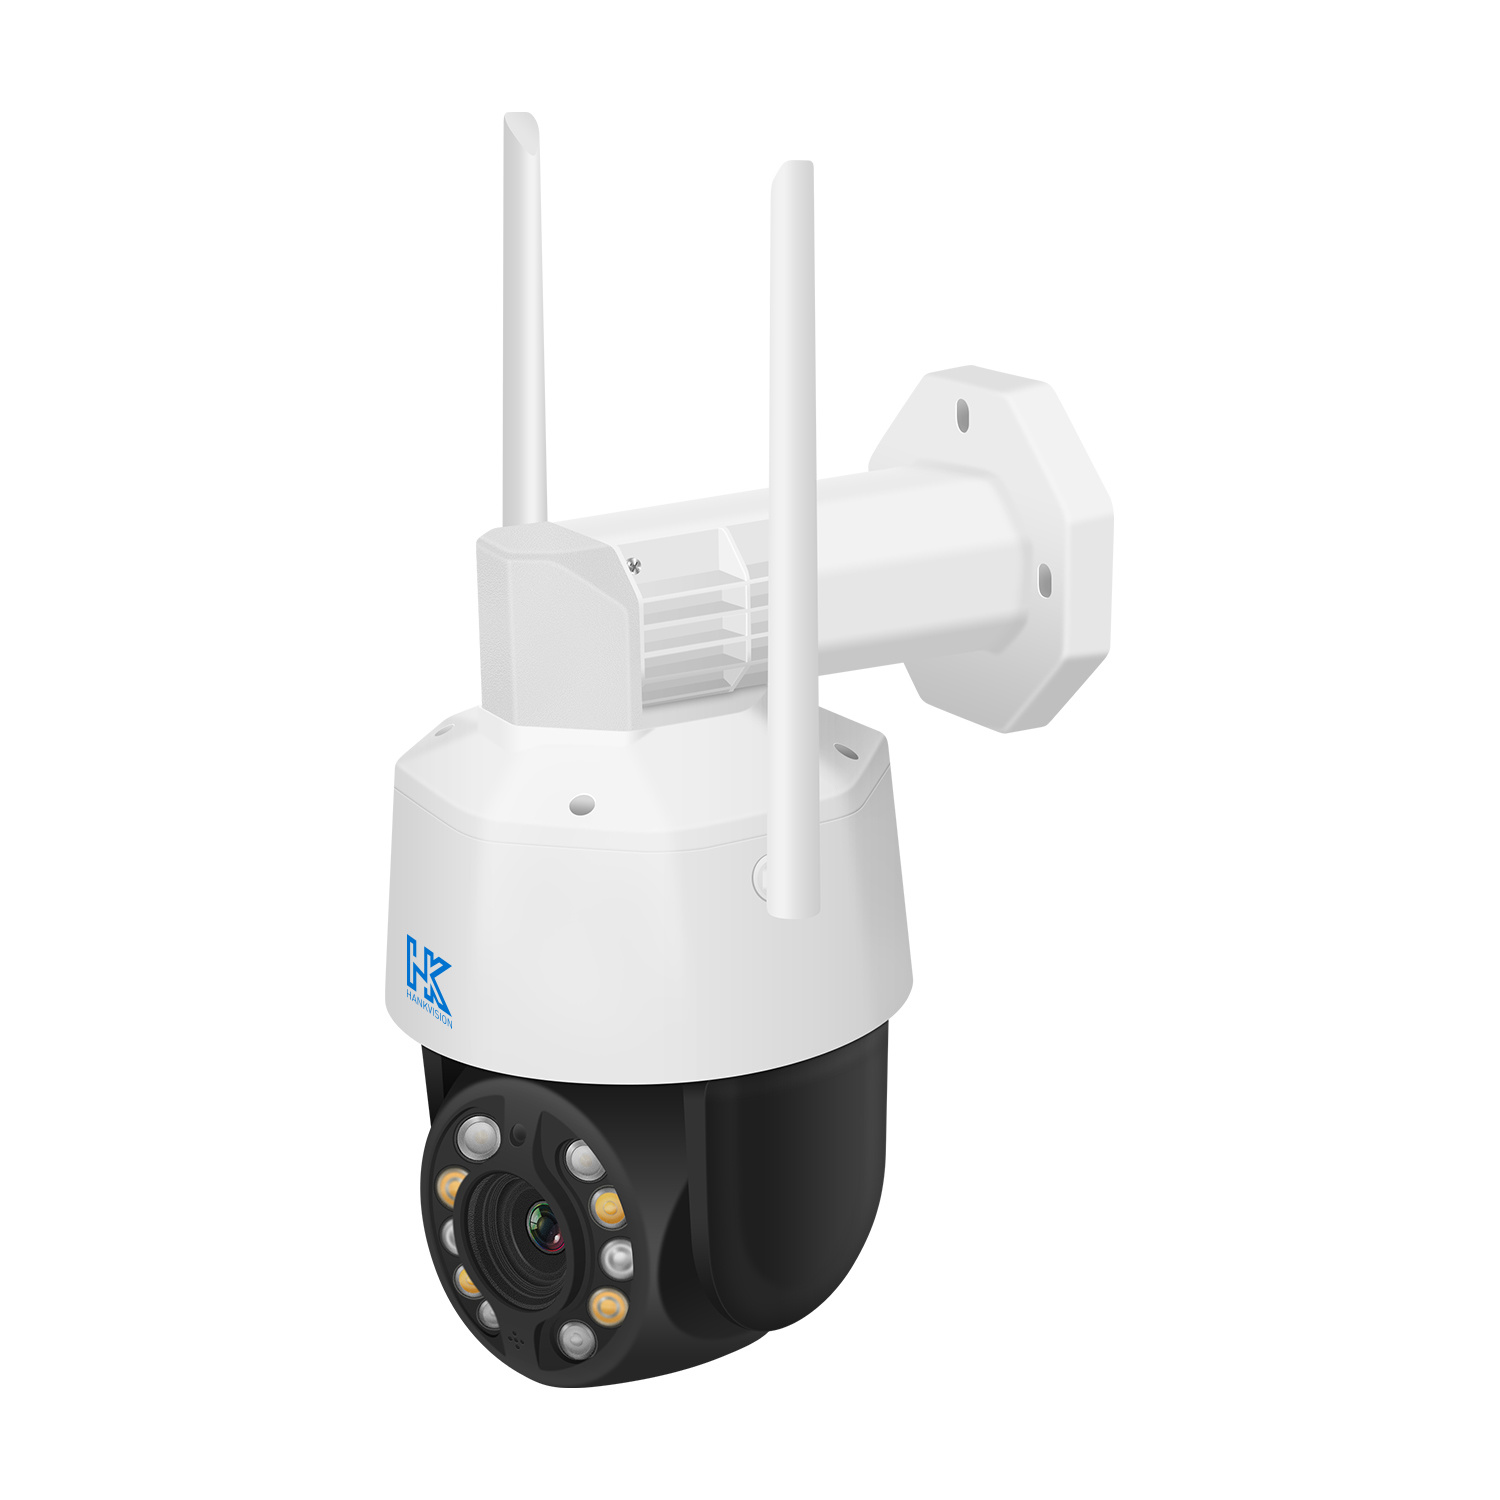 Hankvision WiFi Camera 3MP 20xzoom Poe IP Camera 2-Way Audio Waterproof Tuya CCTV with Alarming Lights